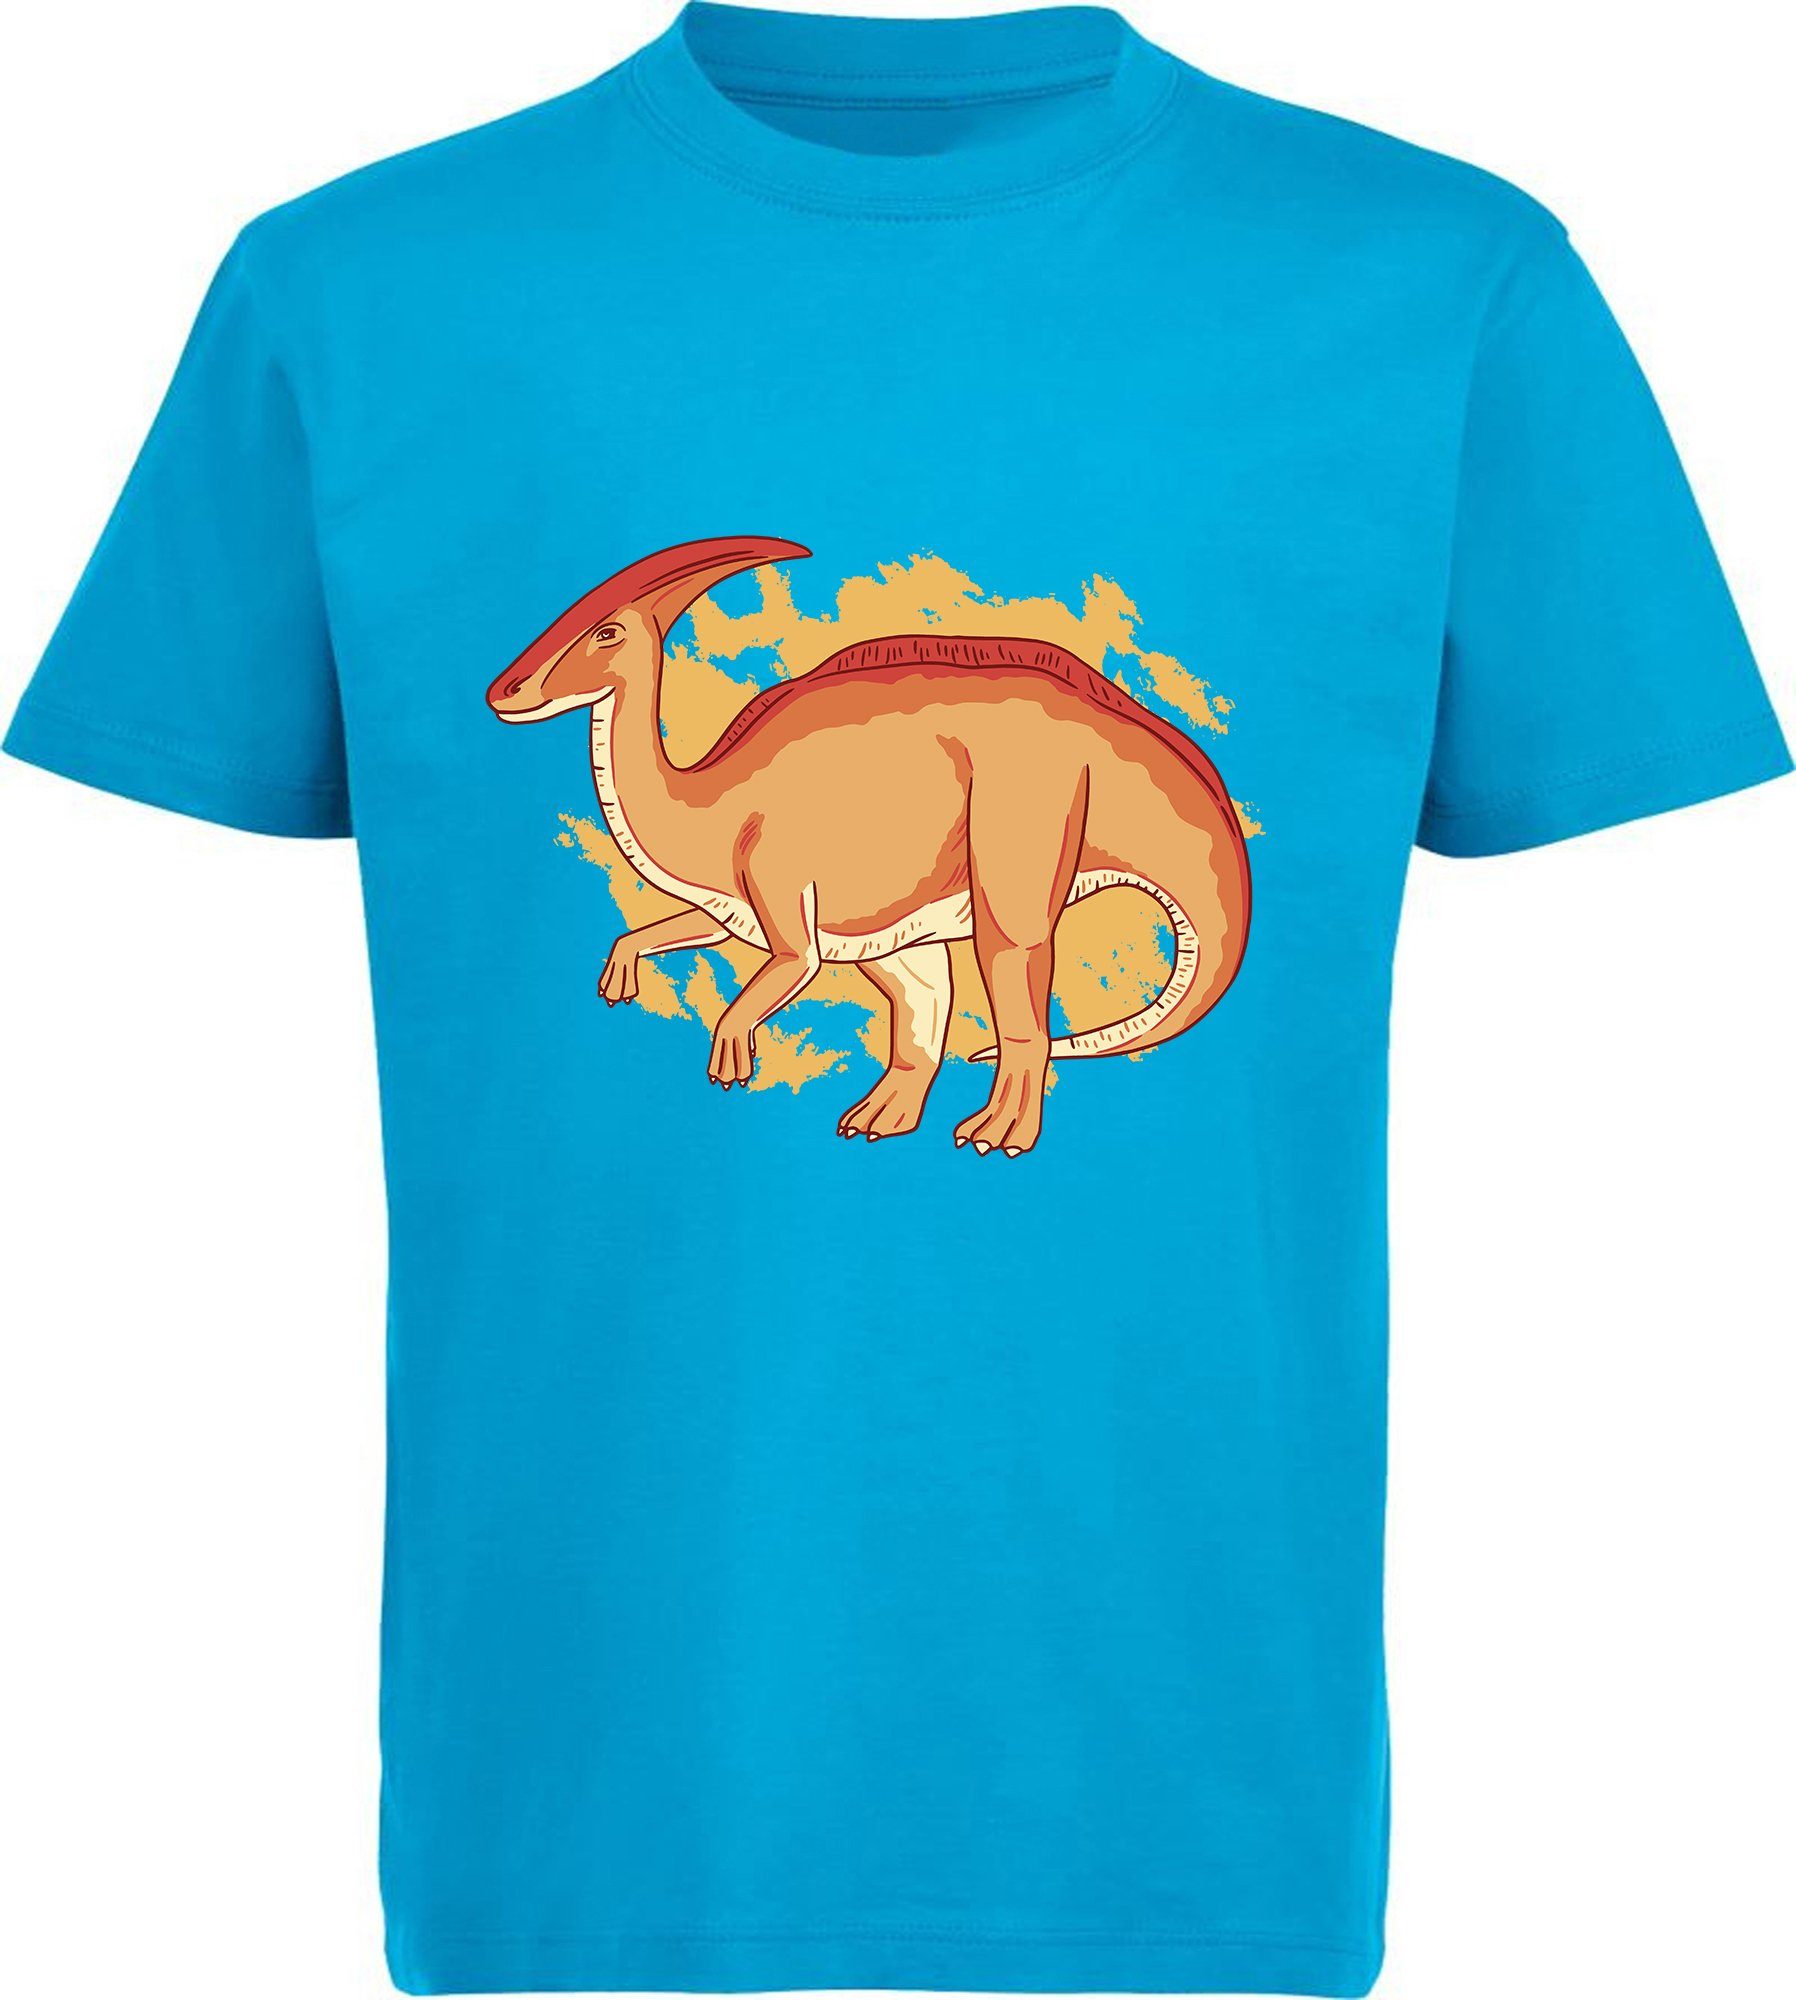 MyDesign24 Print-Shirt bedrucktes Kinder T-Shirt mit Parasaurolophus Baumwollshirt mit Dino, schwarz, weiß, rot, blau, i86 aqua blau